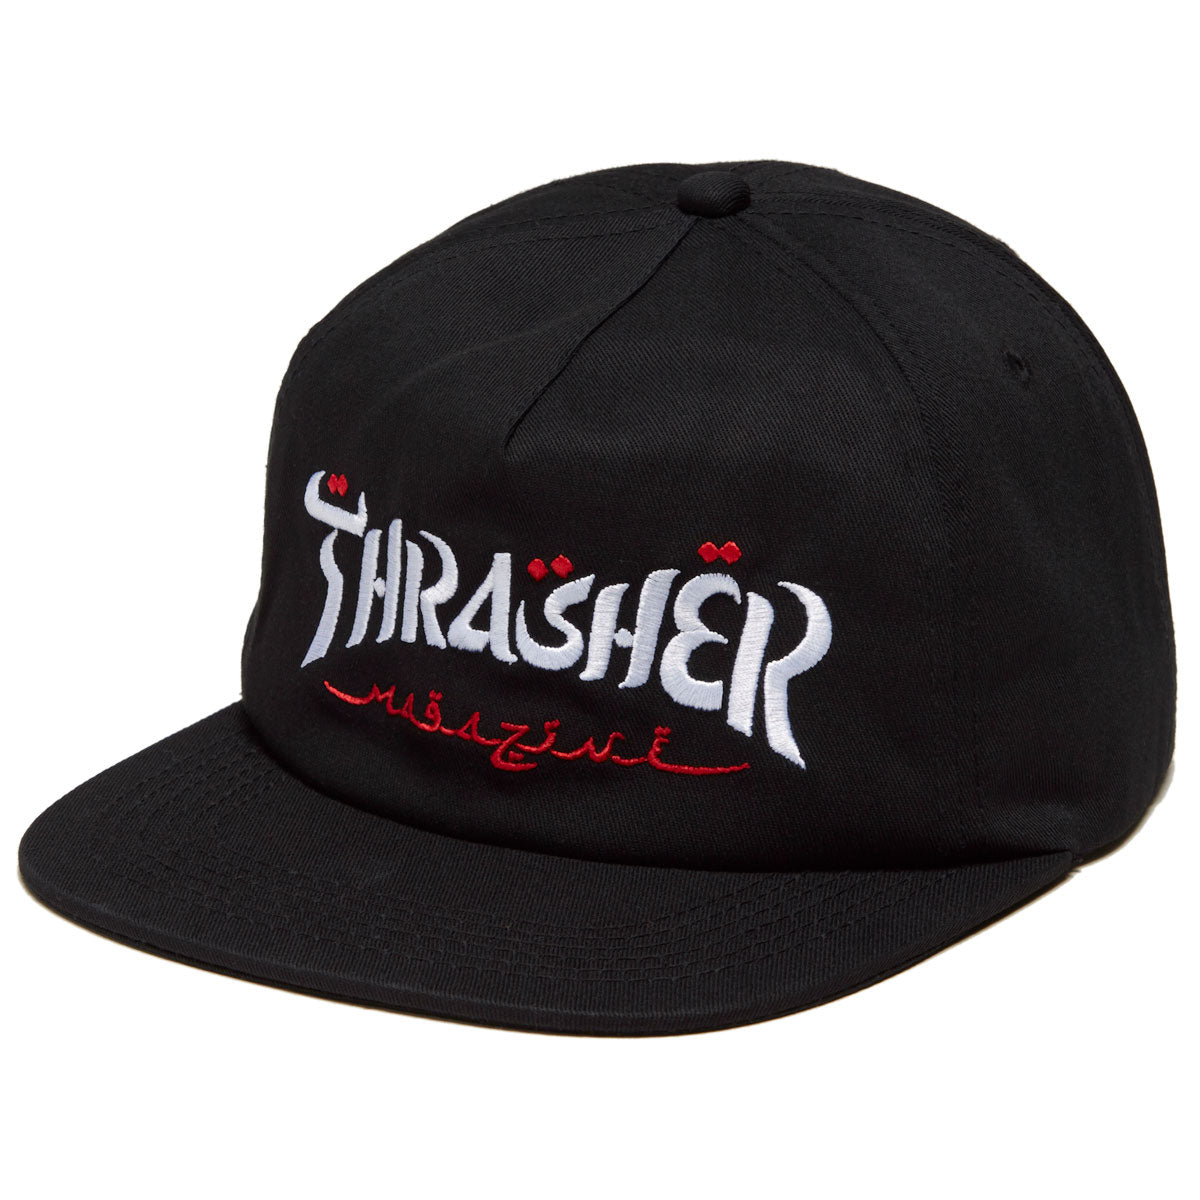 Thrasher Calligraphy Snapback Hat - Black image 1